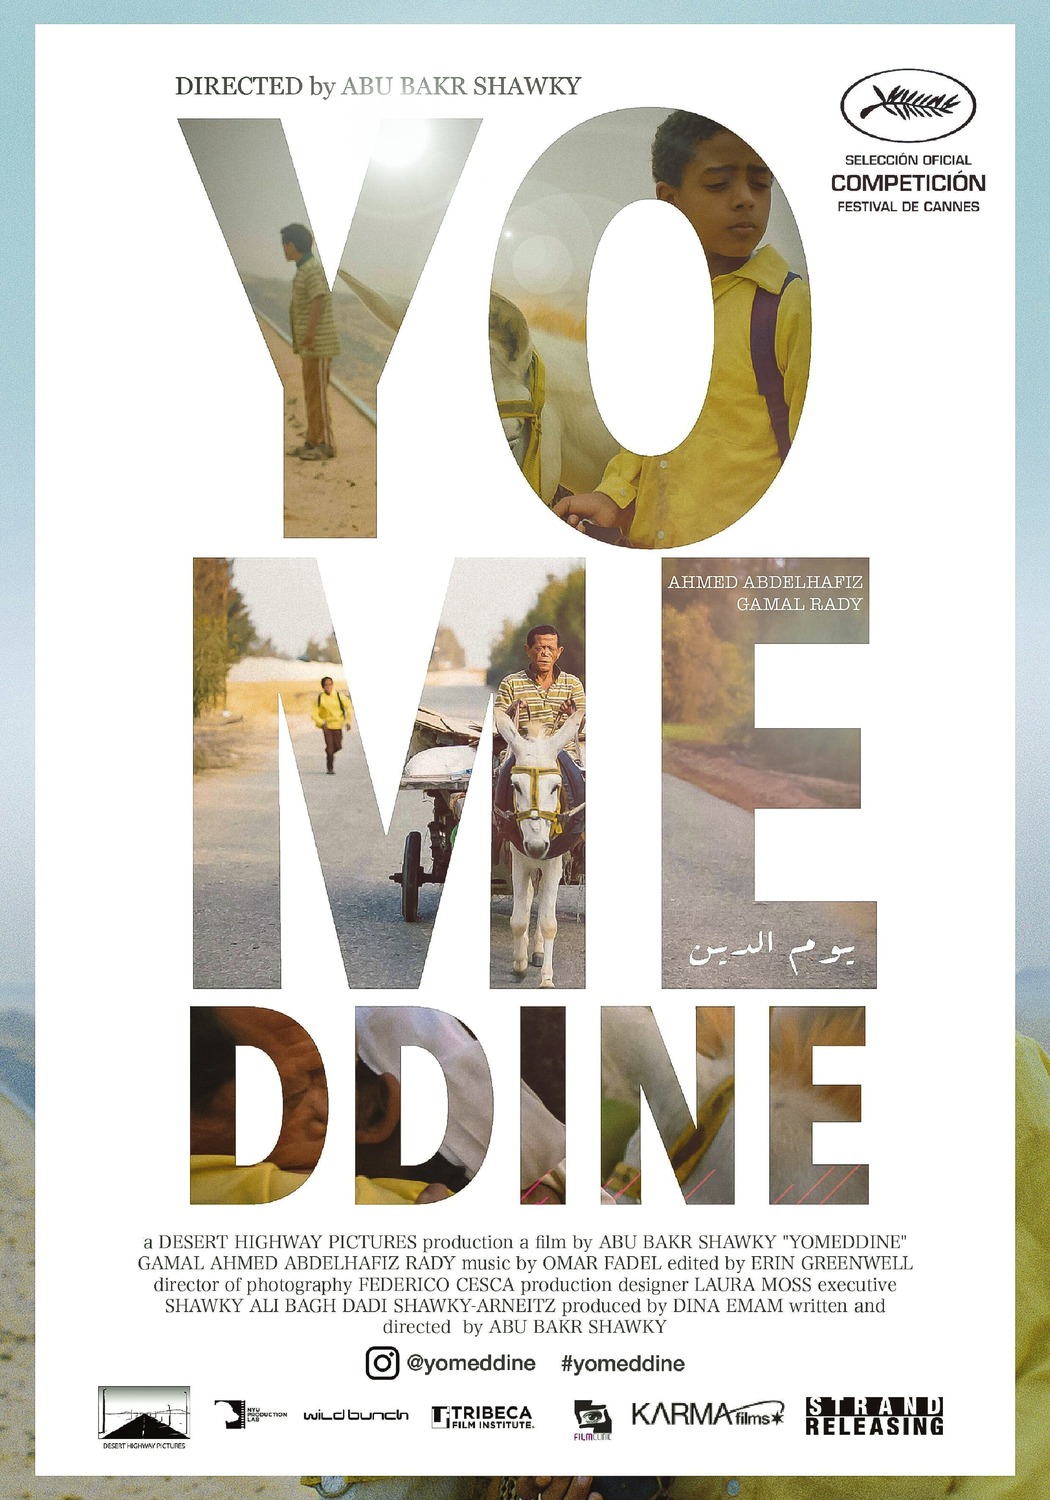 Extra Large Movie Poster Image for Yomeddine 